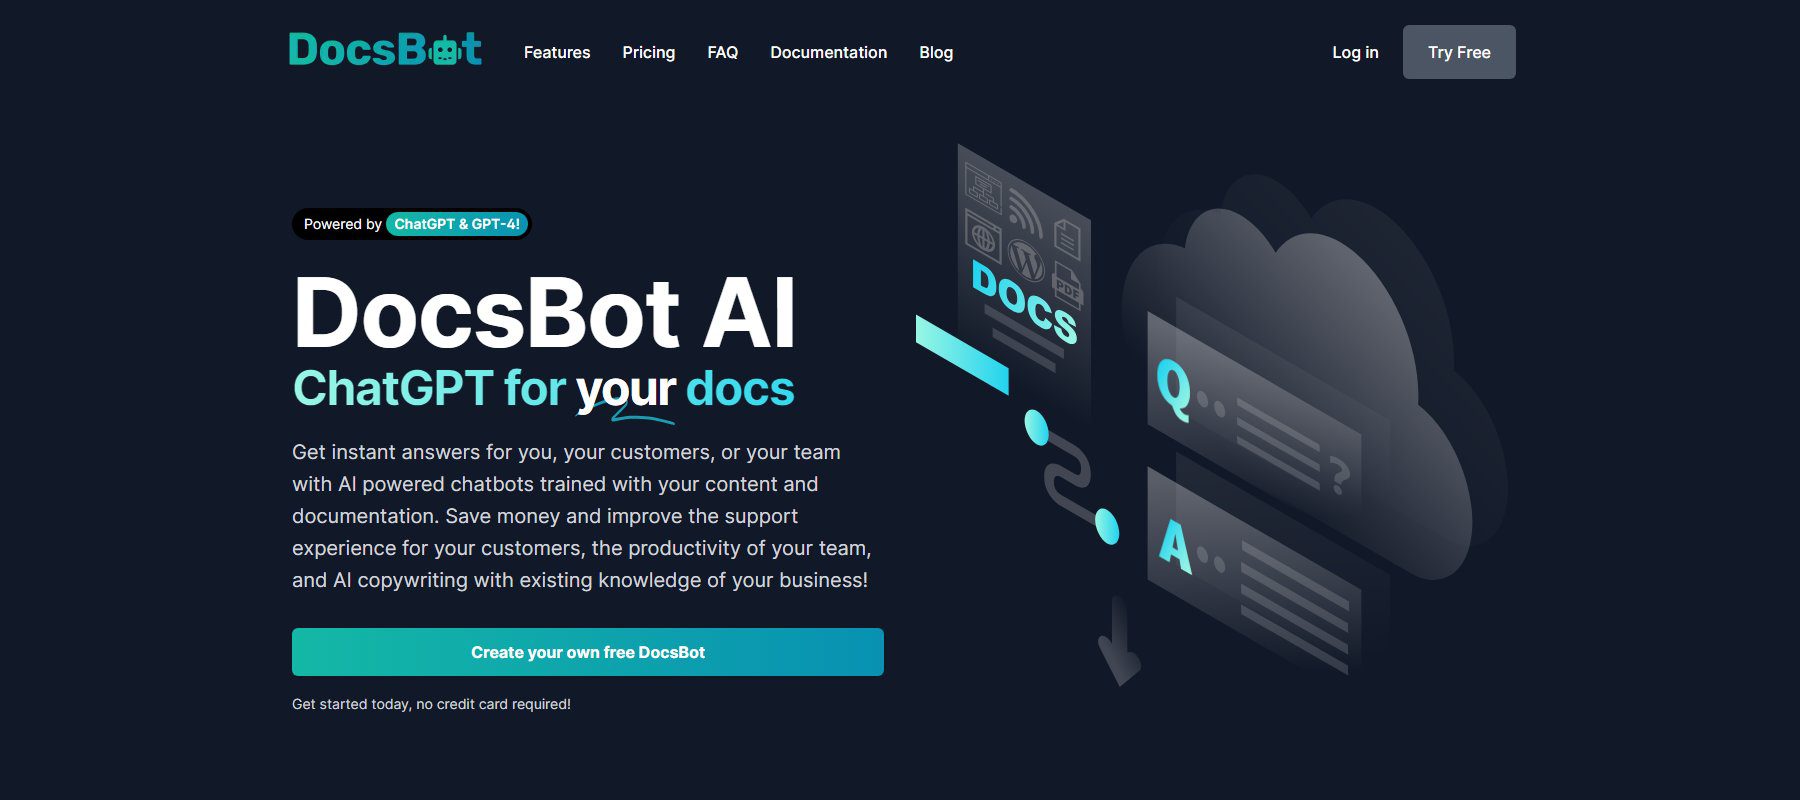 Docsbot AI 챗봇 - 홈페이지